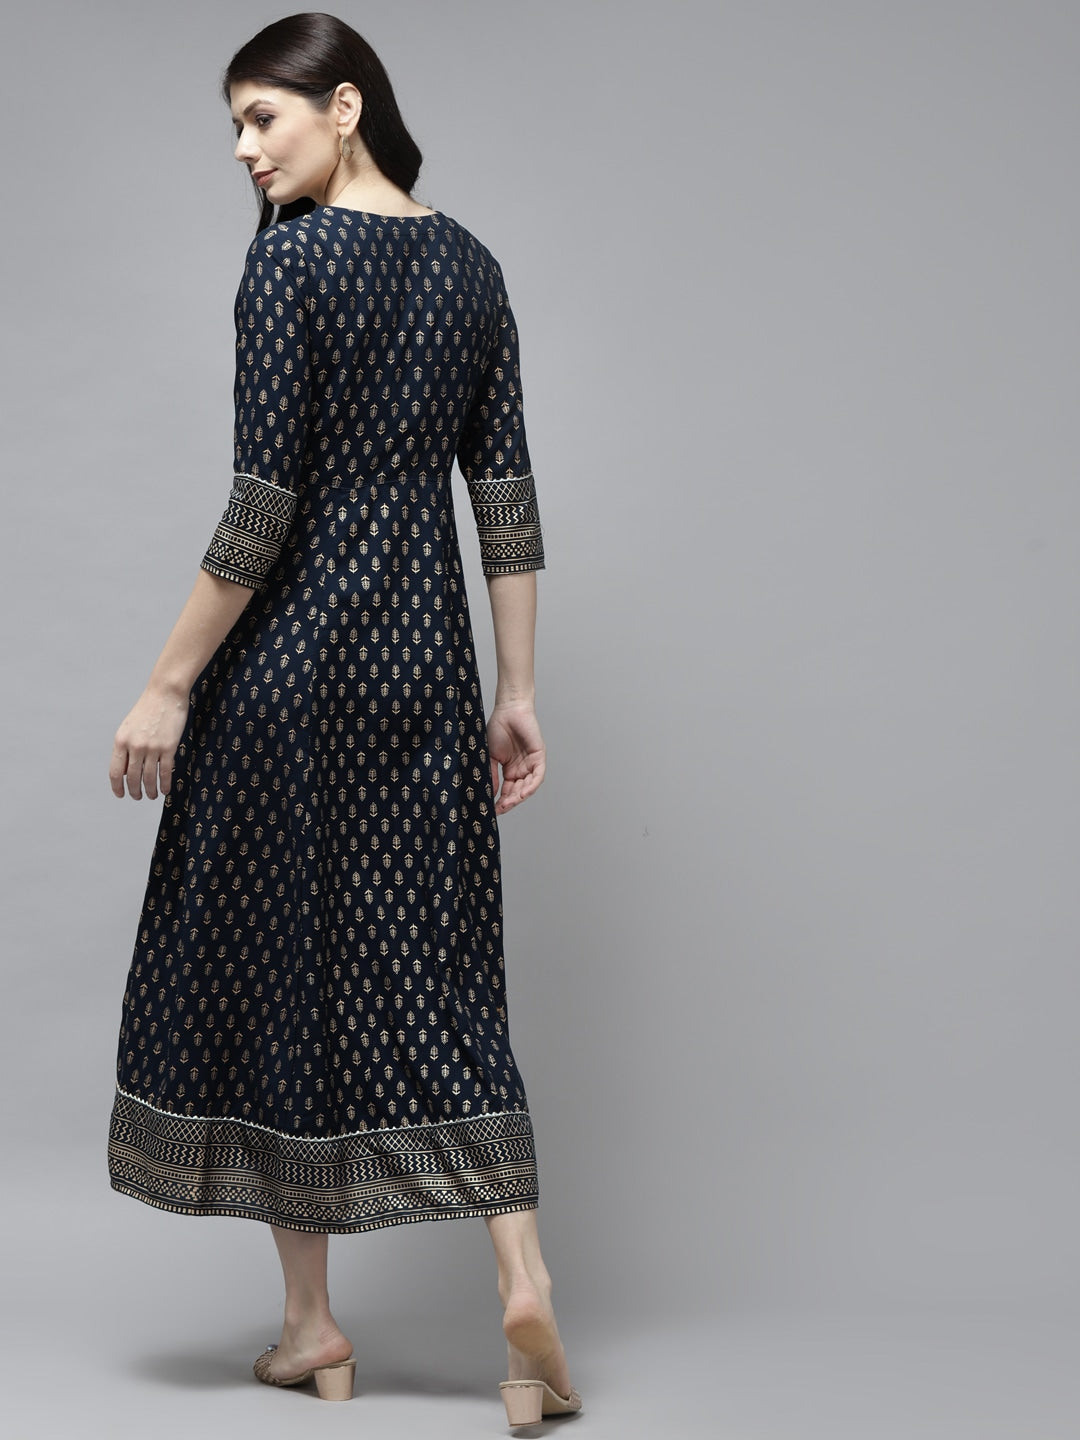 Navy Blue Ethnic A-Line Dress-Yufta Store-5804DRSNBS